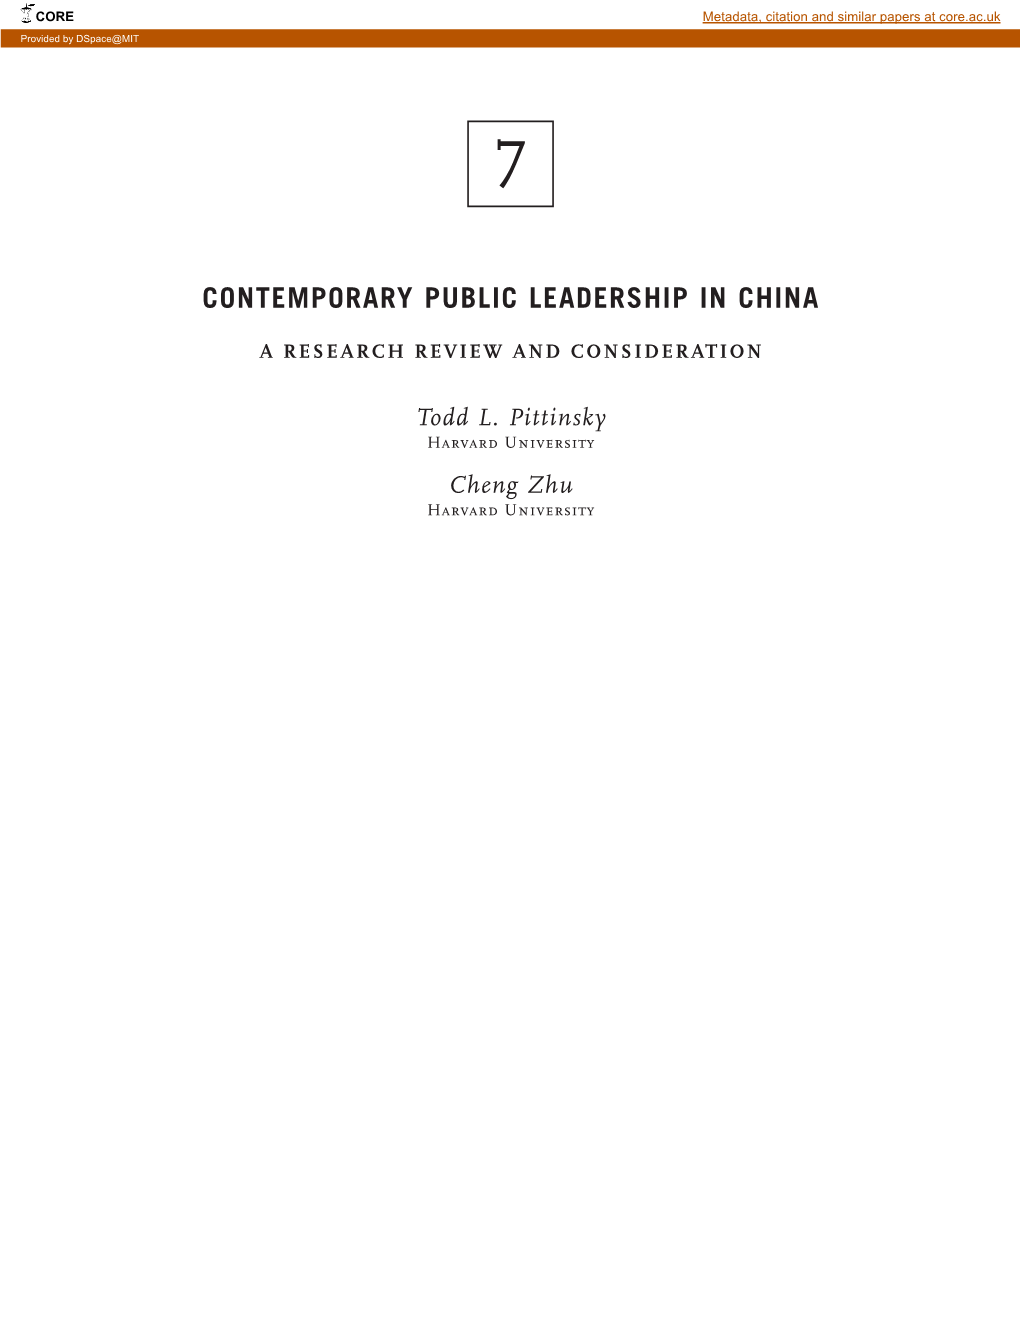 Contemporary Public Leadership in China